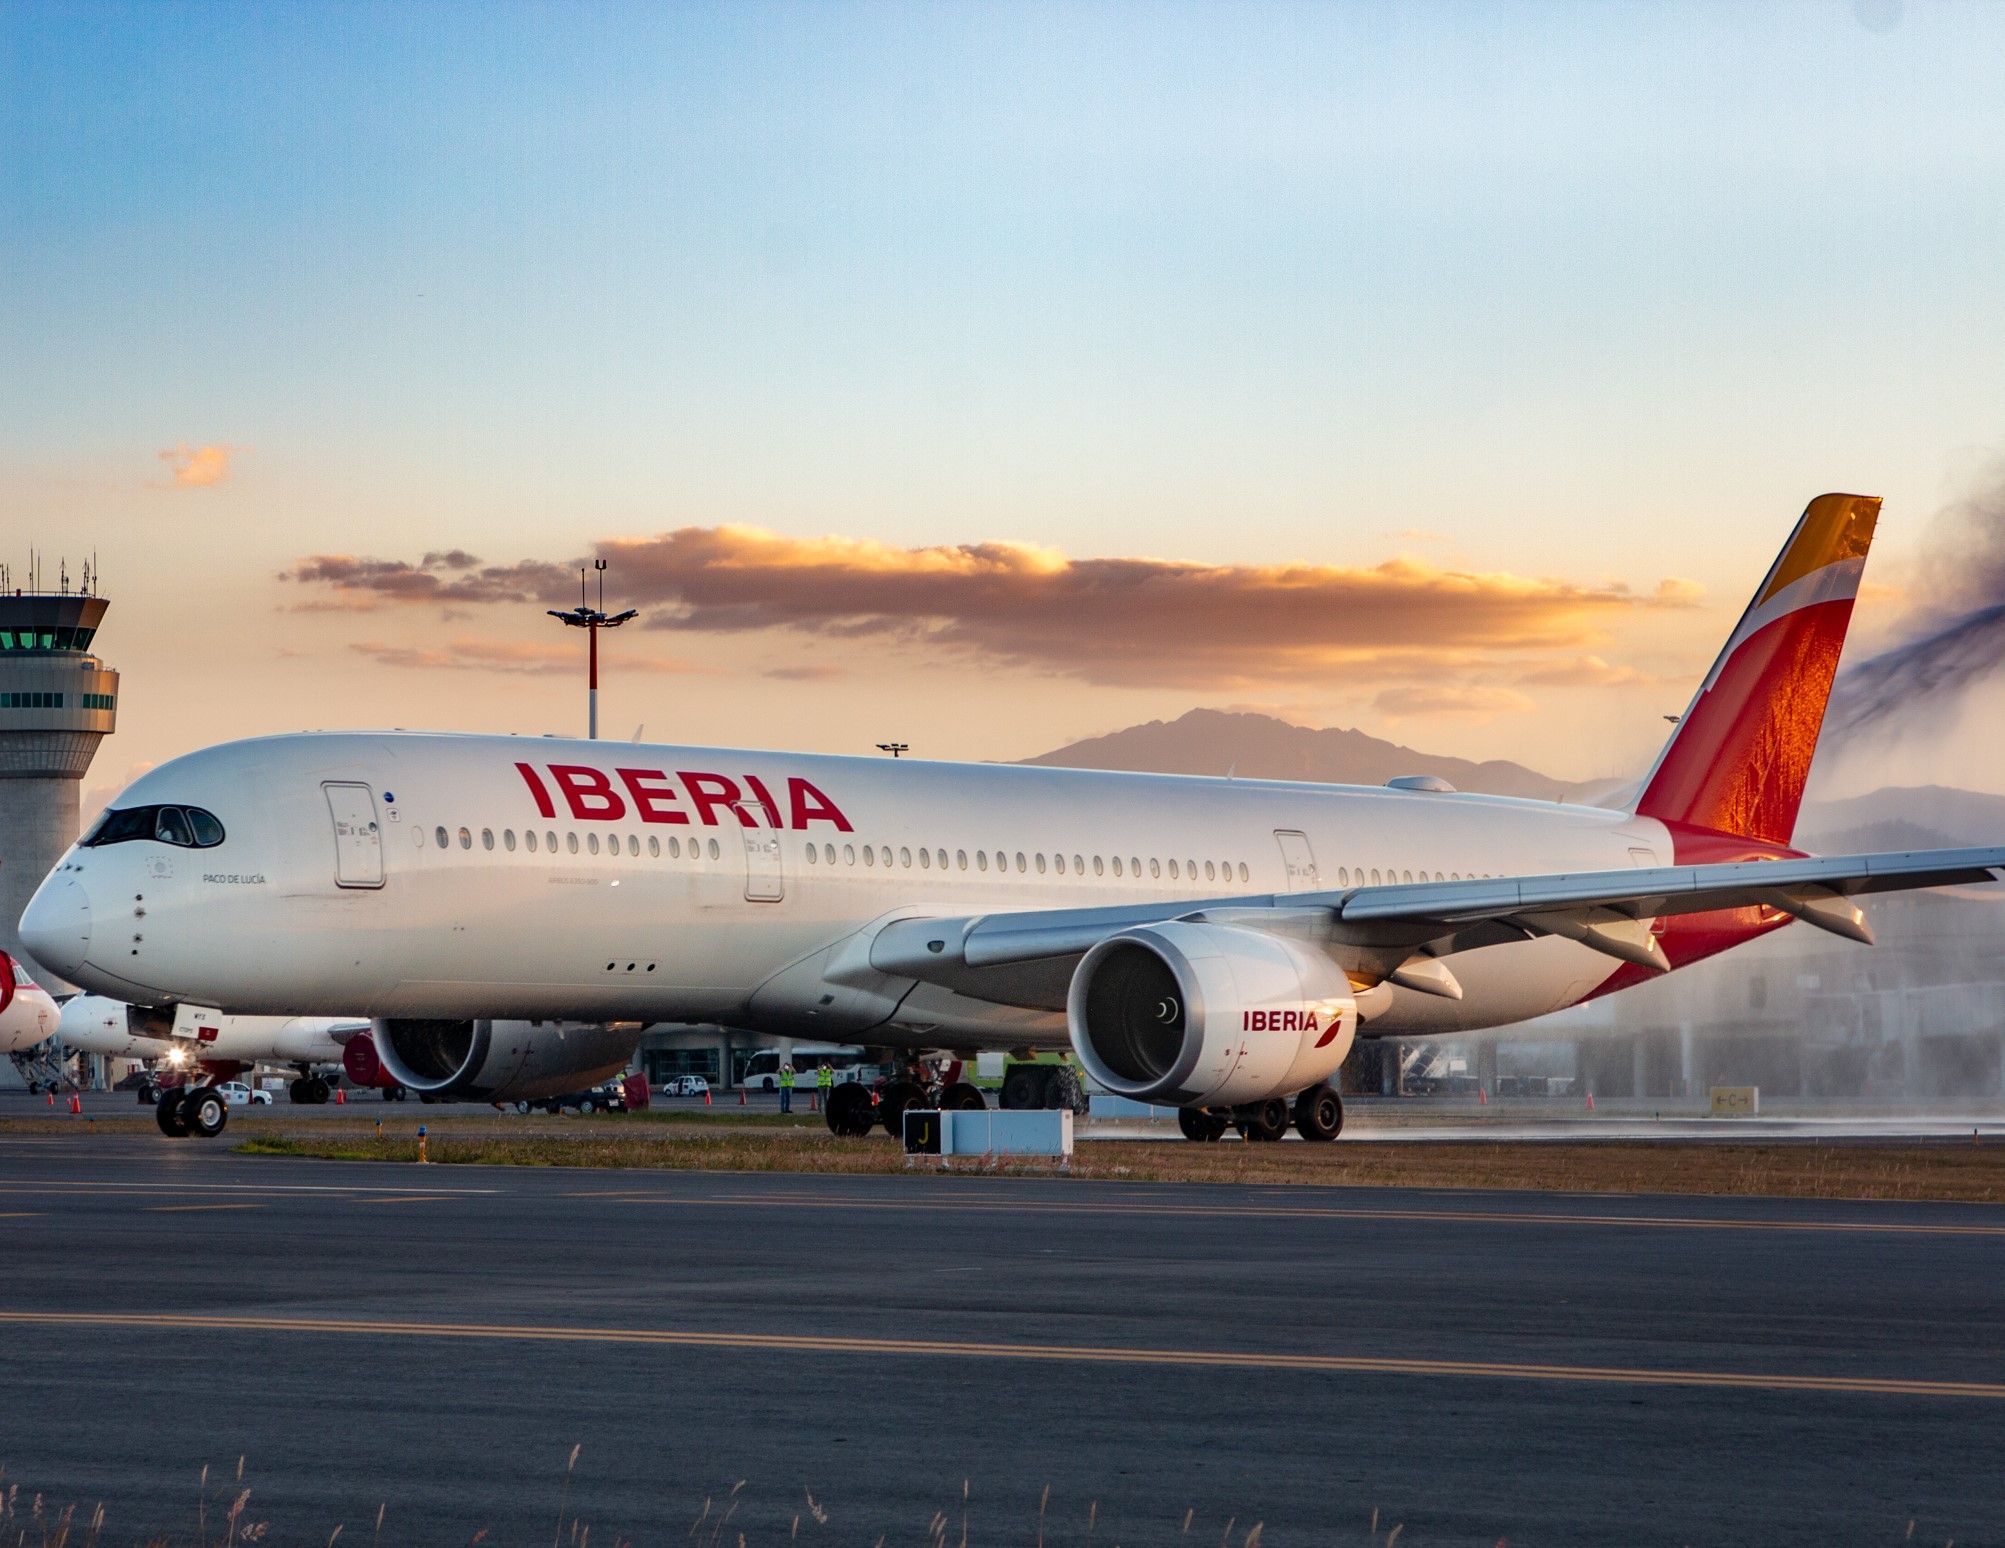 Iberia aircraft on apron